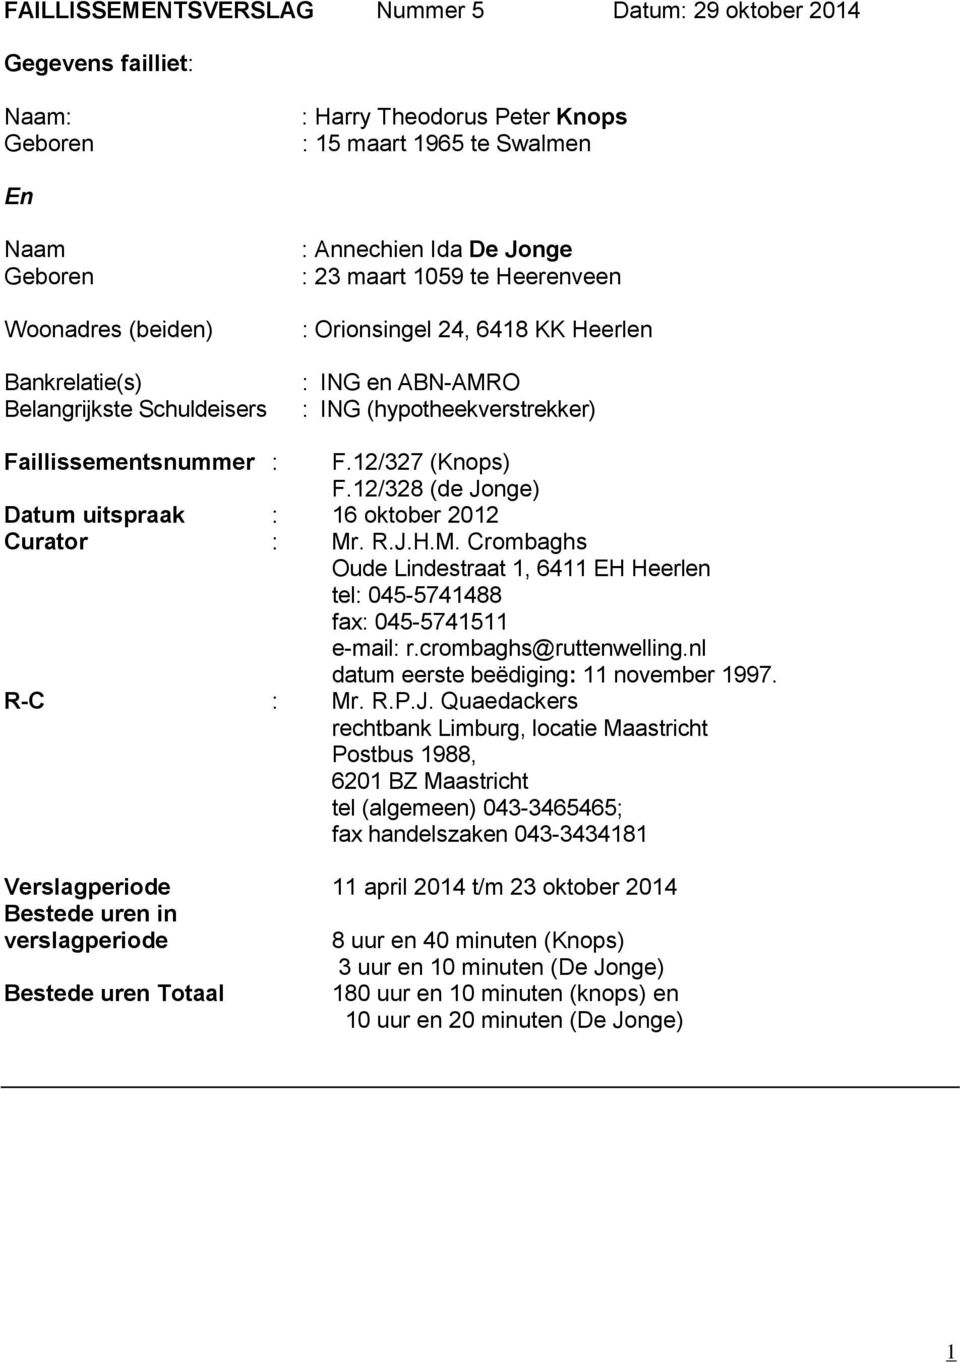 12/327 (Knops) F.12/328 (de Jonge) Datum uitspraak : 16 oktober 2012 Curator : Mr. R.J.H.M. Crombaghs Oude Lindestraat 1, 6411 EH Heerlen tel: 045-5741488 fax: 045-5741511 e-mail: r.